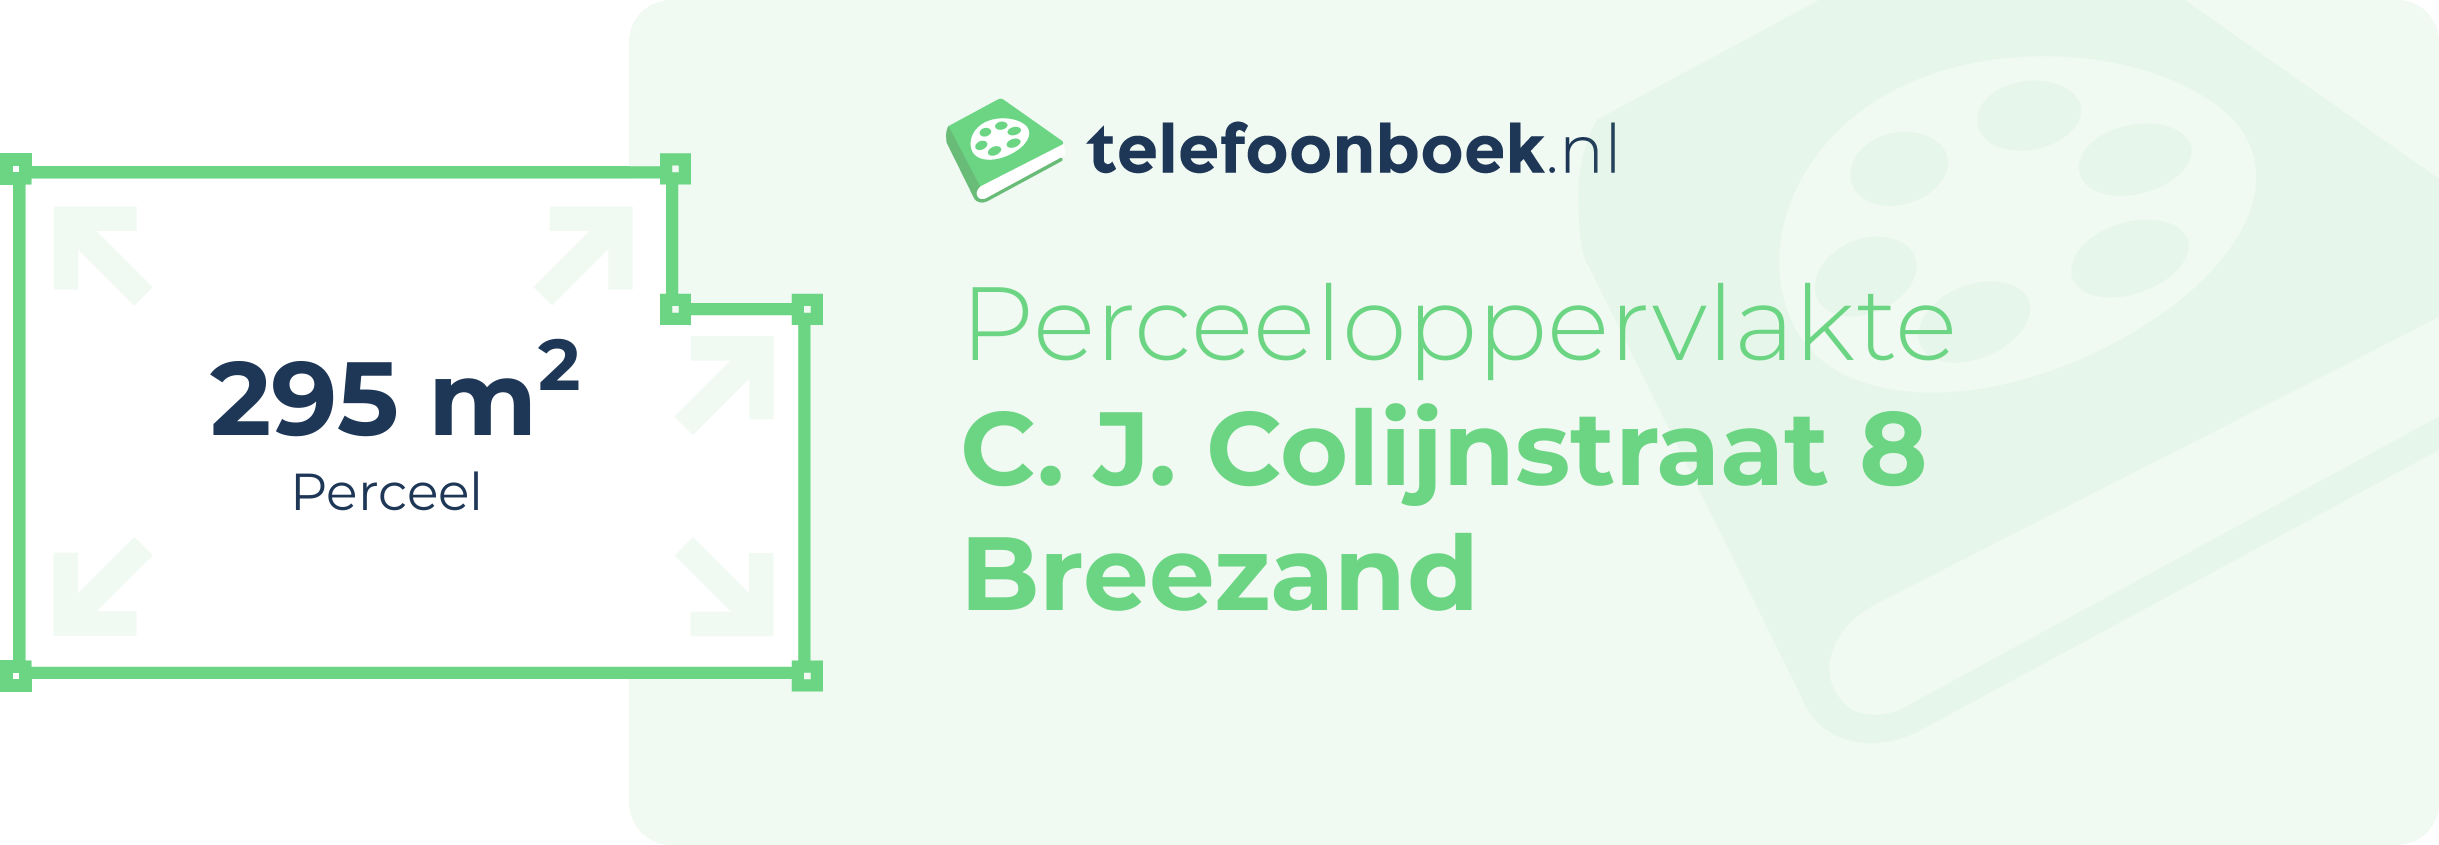 Perceeloppervlakte C. J. Colijnstraat 8 Breezand